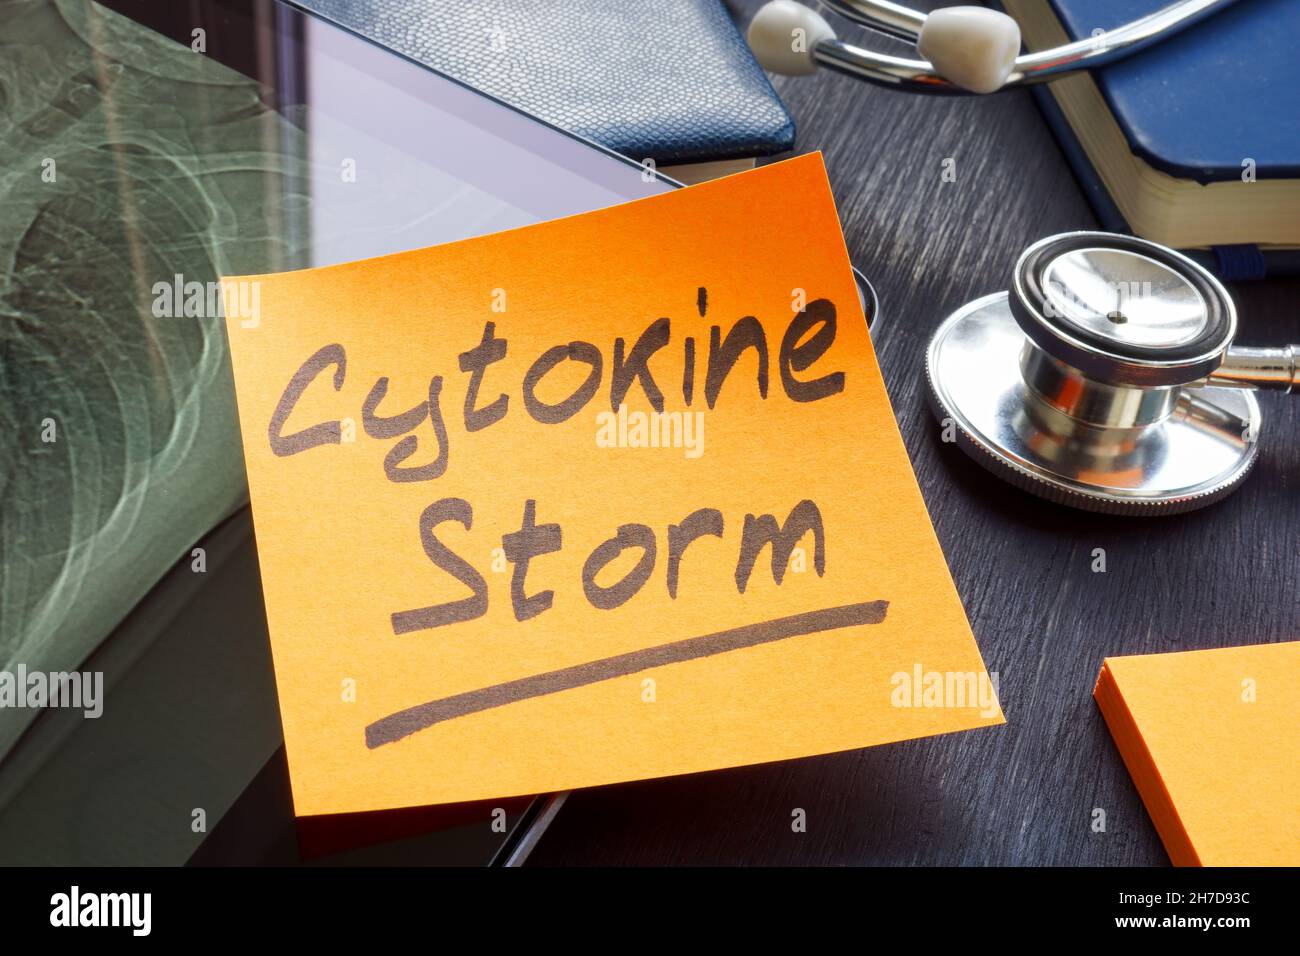 Cytokine storm memo sticker on the hospital table. Stock Photo